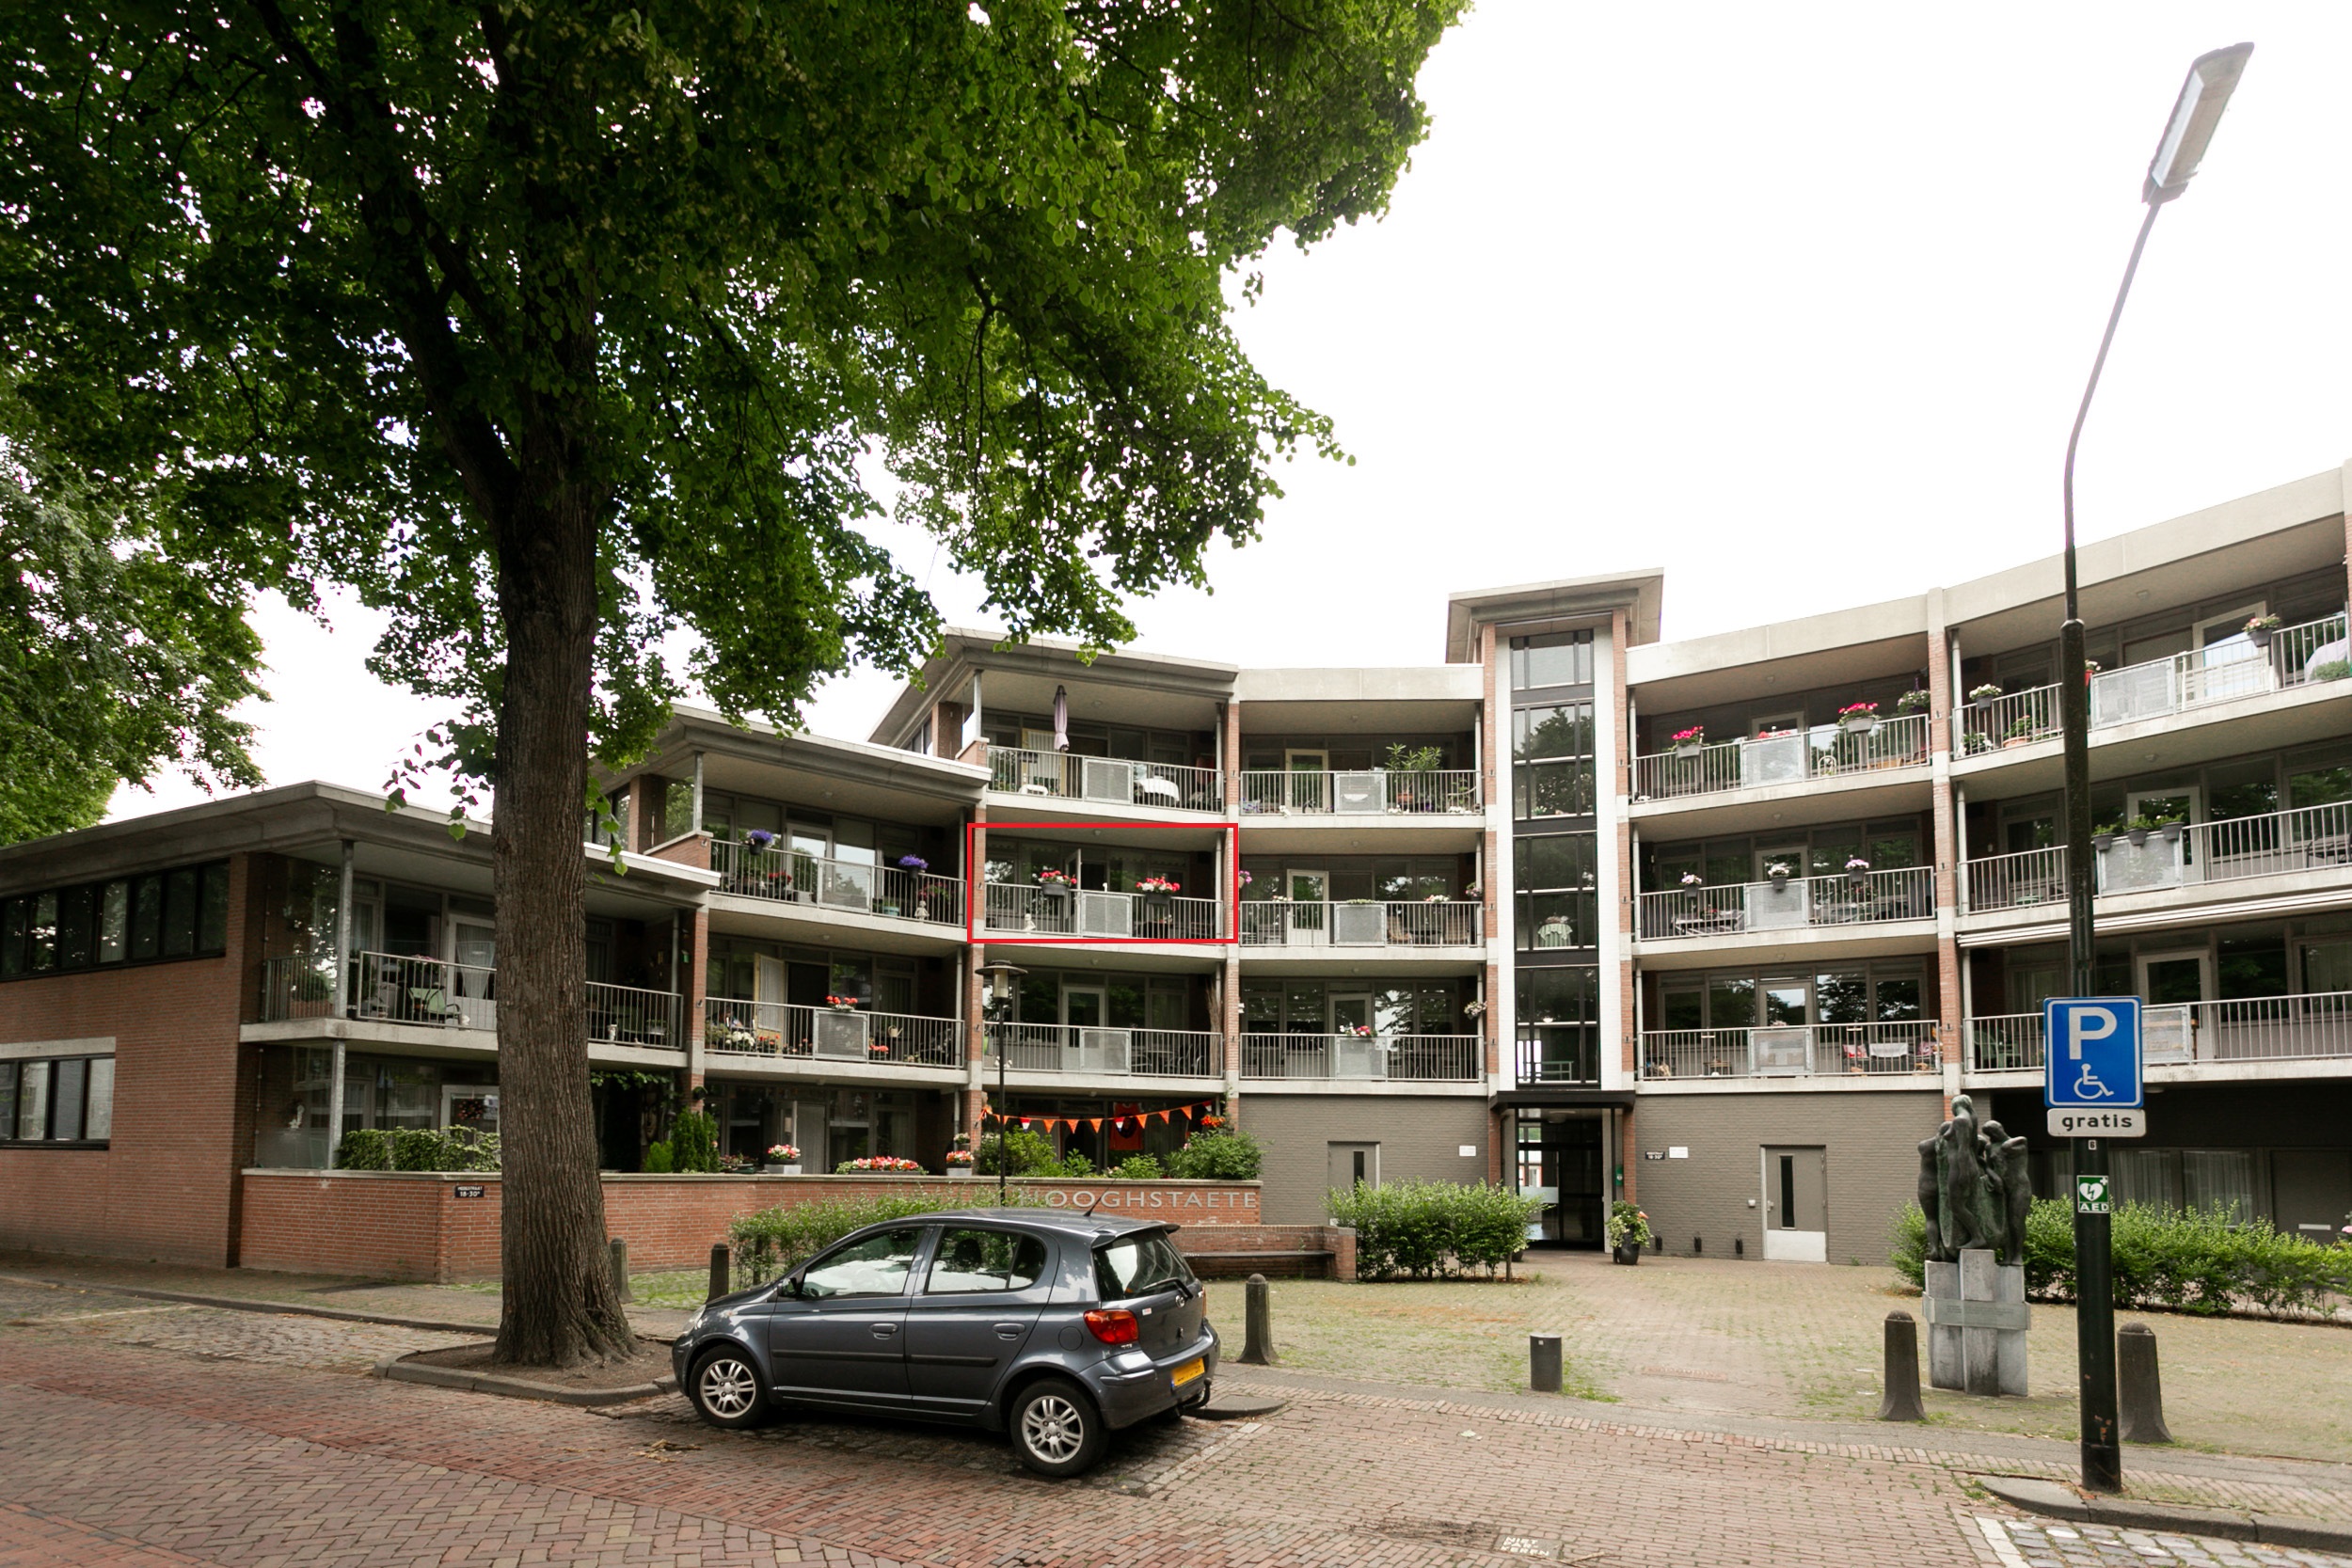 Hoogstraat 26B, 5061 EV Oisterwijk, Nederland